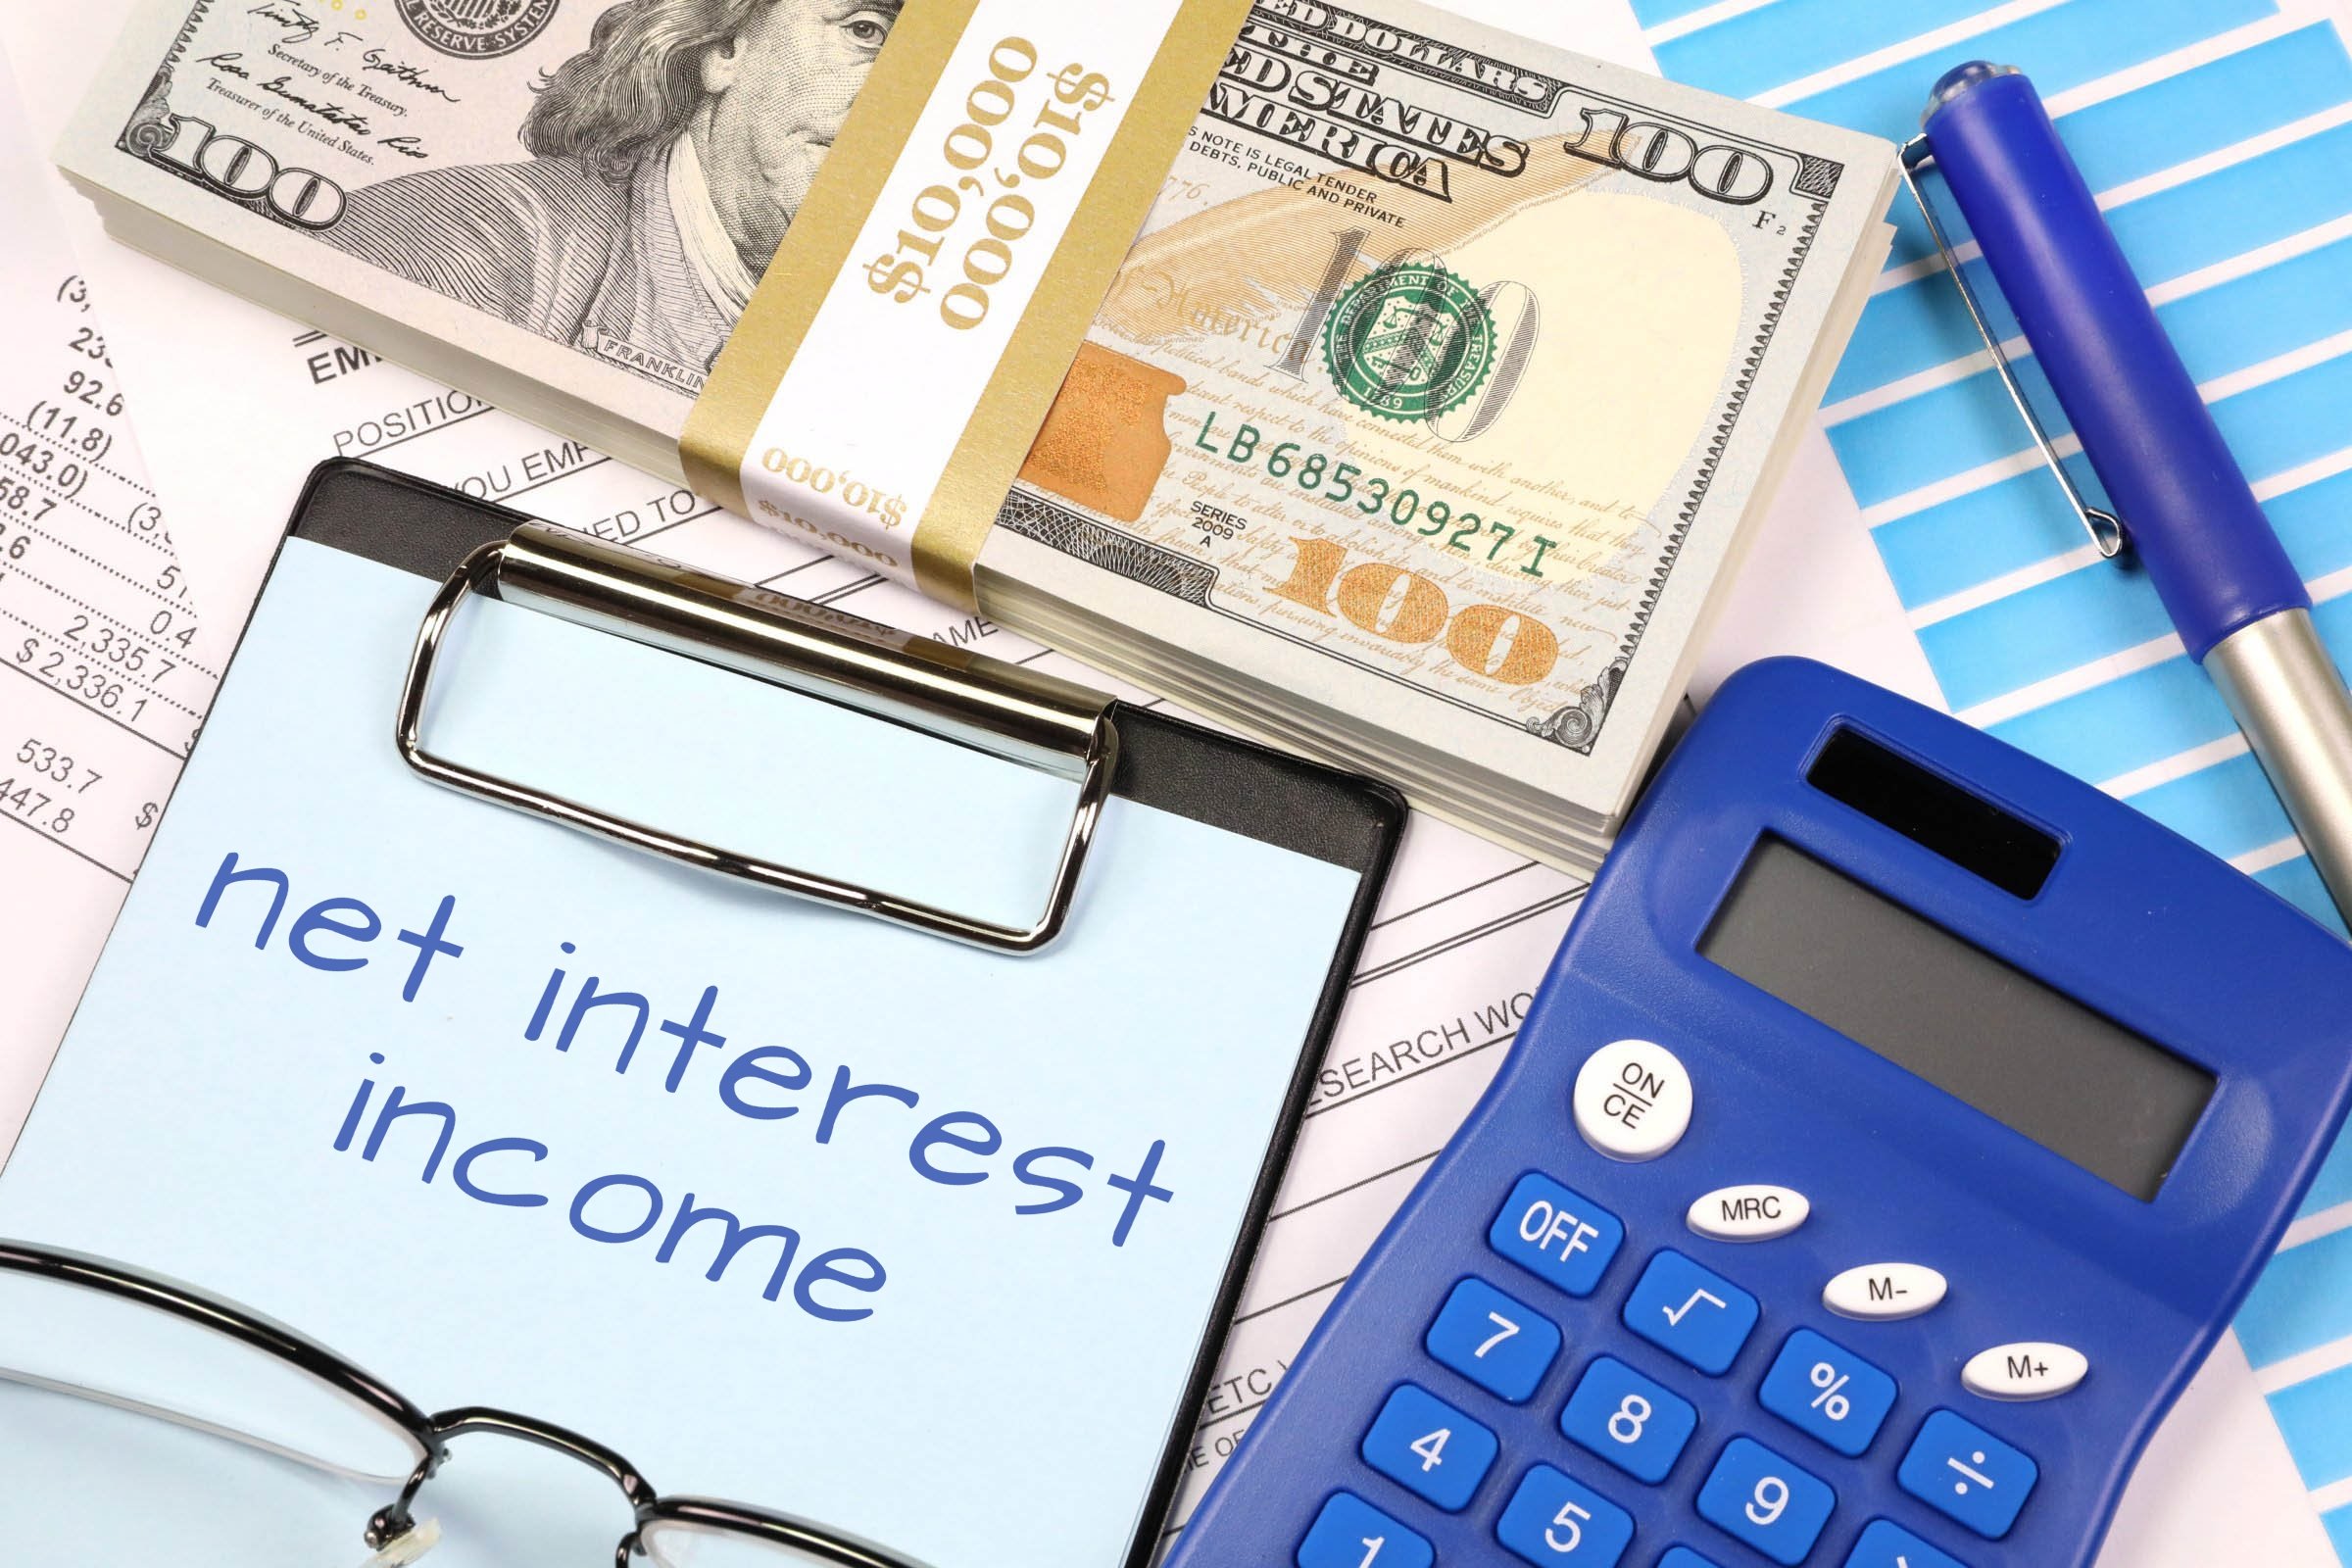 Net Interest Income